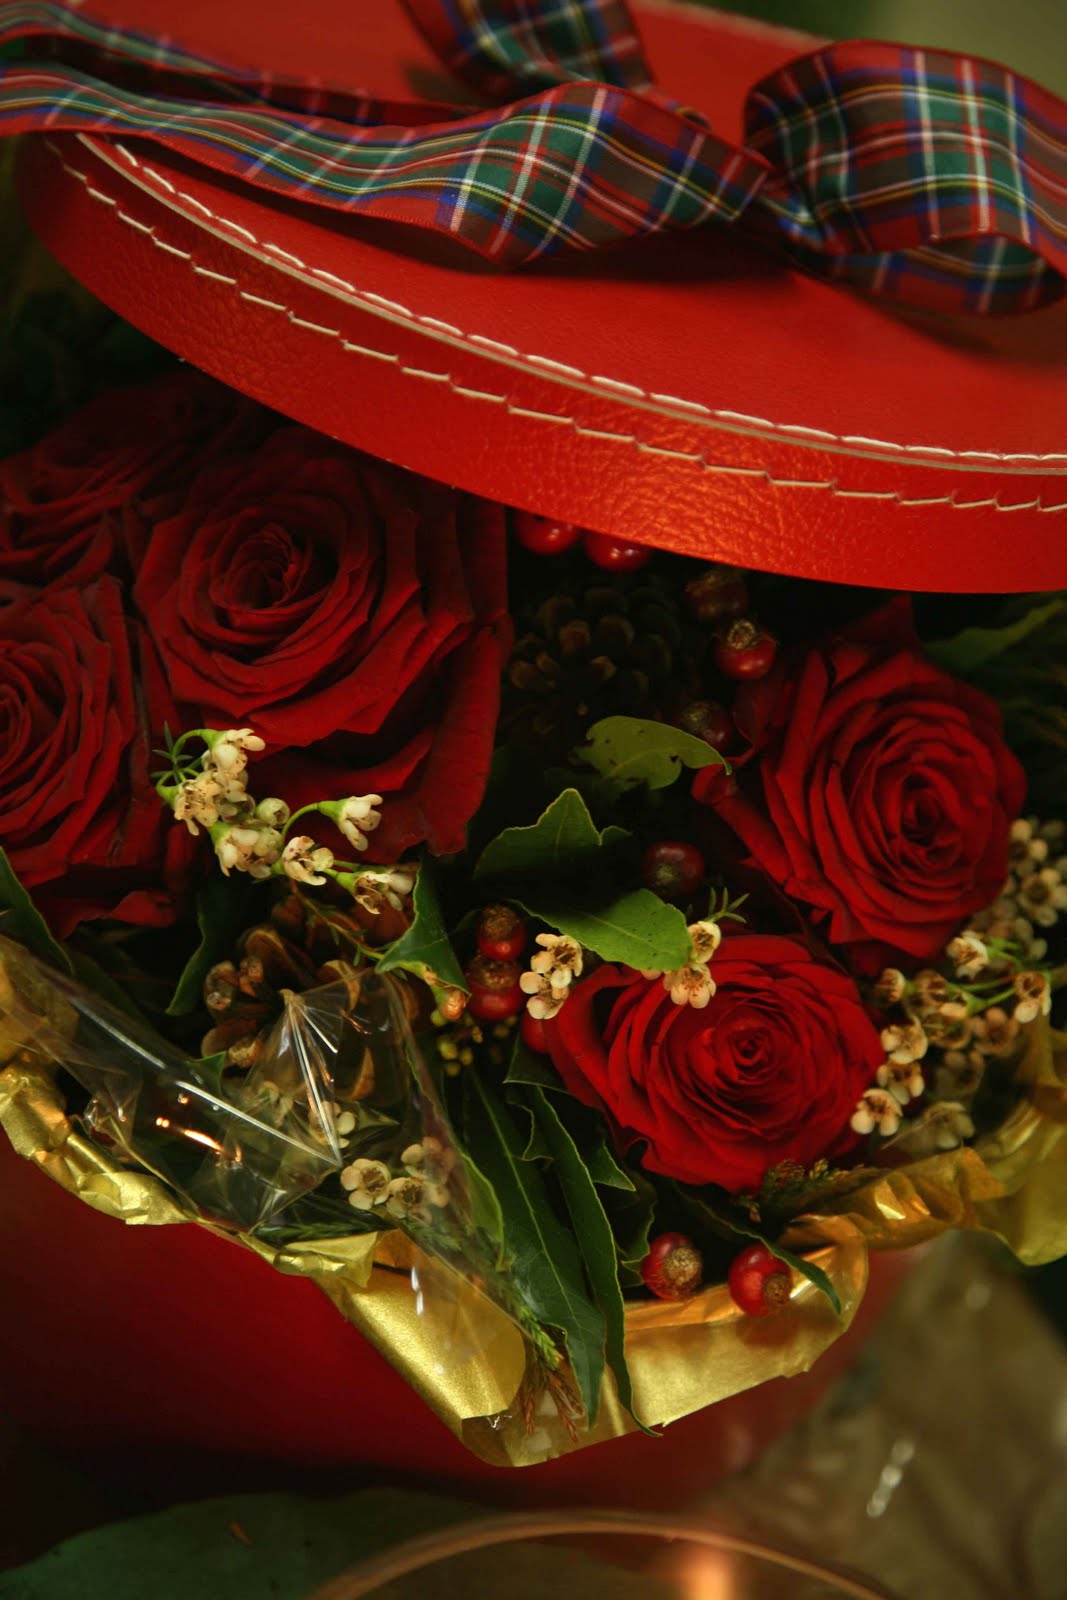 http://1.bp.blogspot.com/_Olt9_iYHvXA/SwZRnFScYpI/AAAAAAAAAjM/aJOamx51oAU/s1600/basket+of+roses.jpg